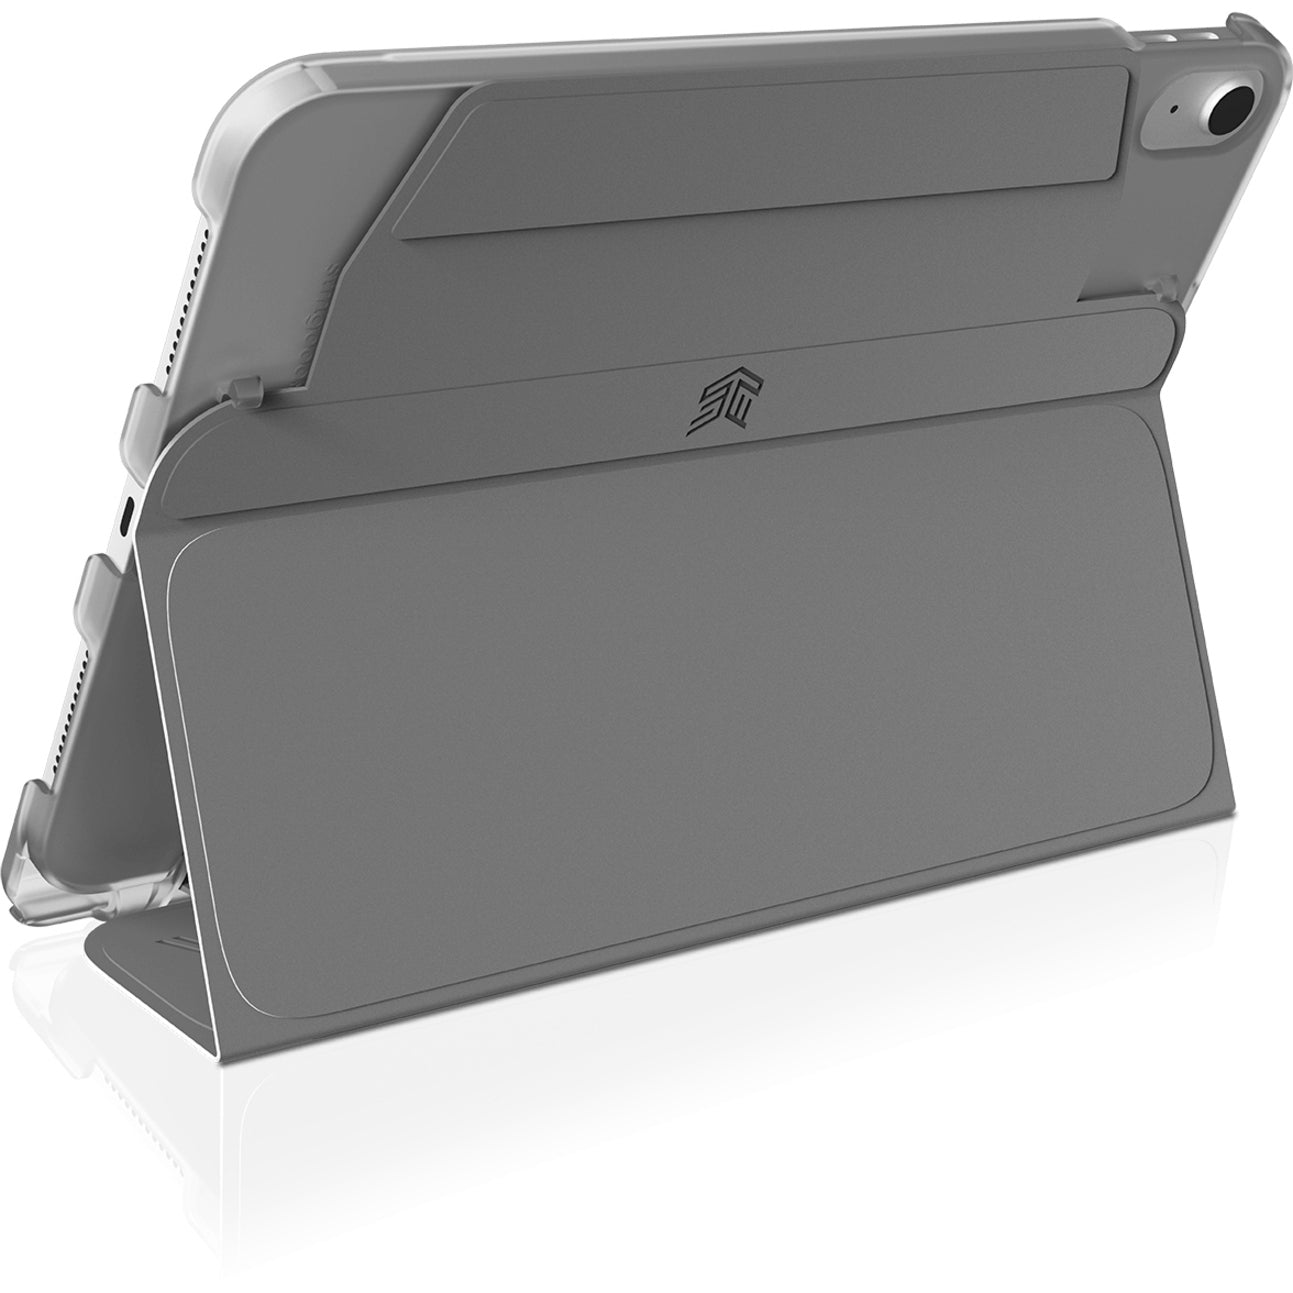 STM Goods STM-222-383KX-02 Studio iPad 10th Gen Carrying Case, Magnetic Closure, Gray